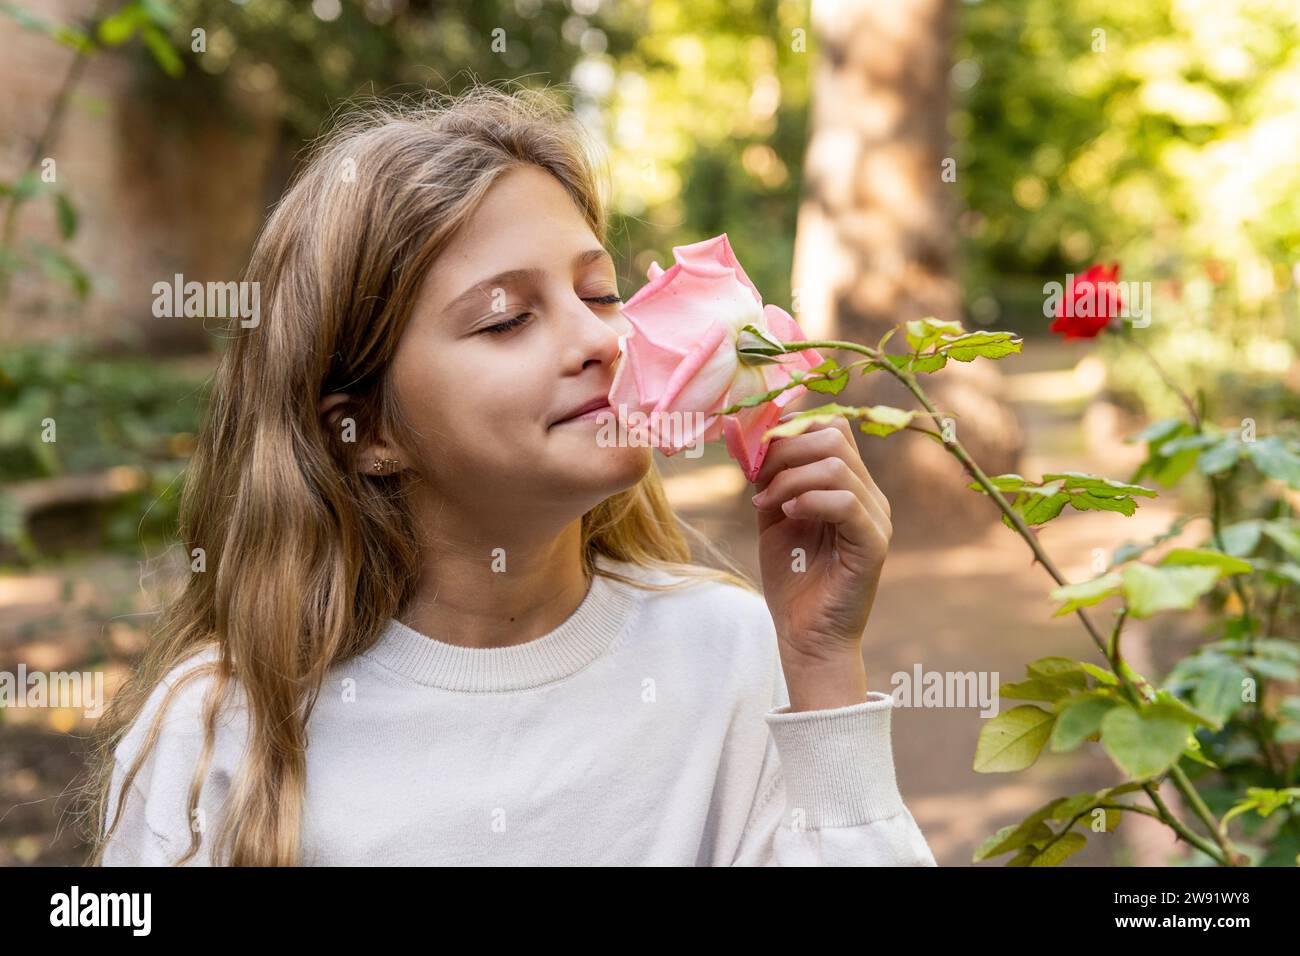 Smiling girl smelling pink rose flower in park Stock Photo